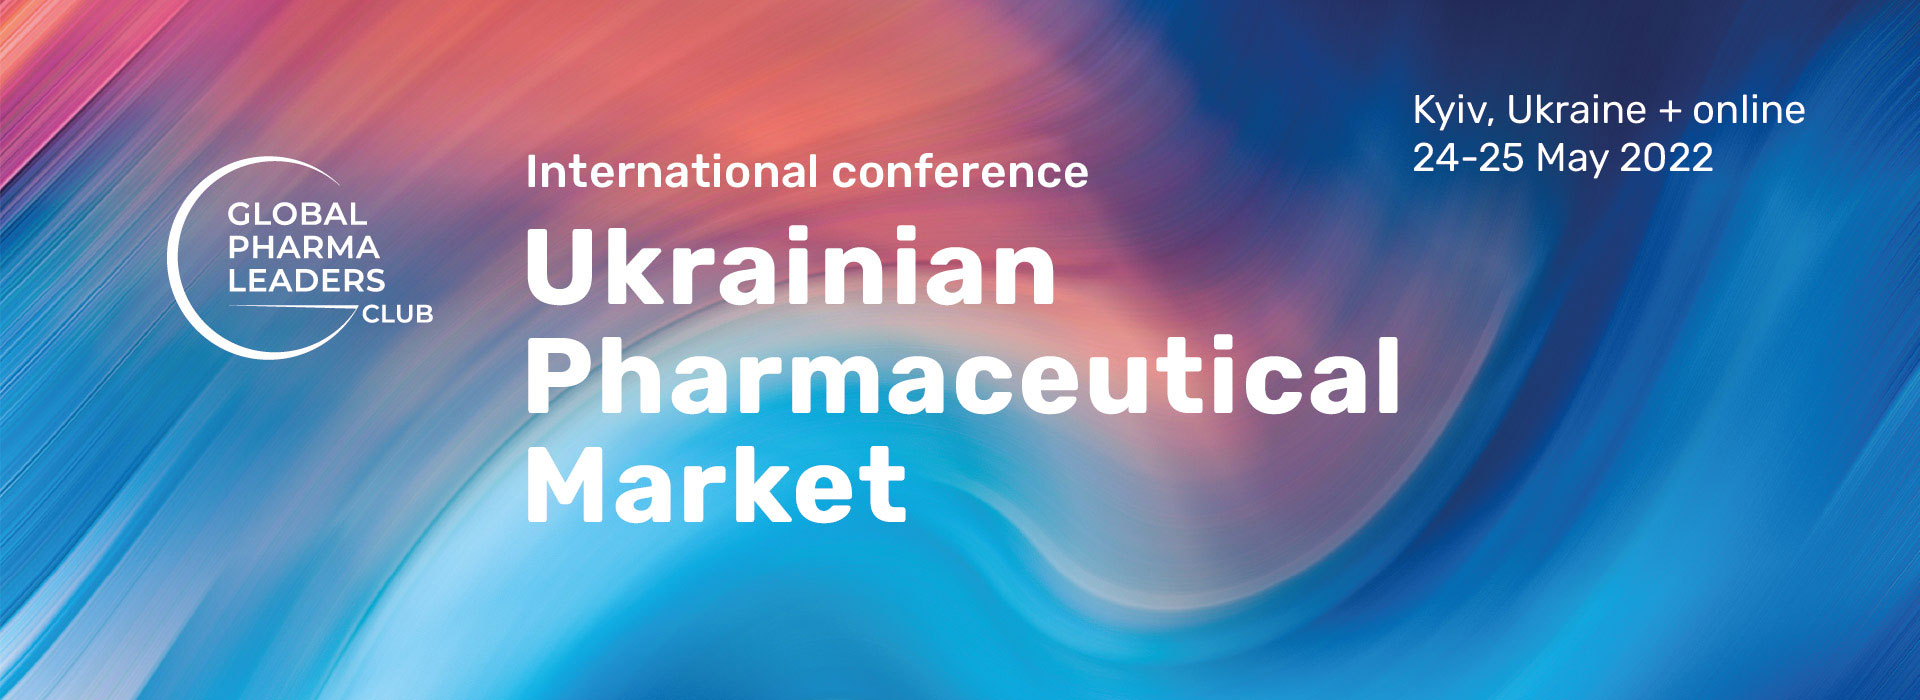 International Conference "Ukrainian Pharmaceutical Market & Ukrainian